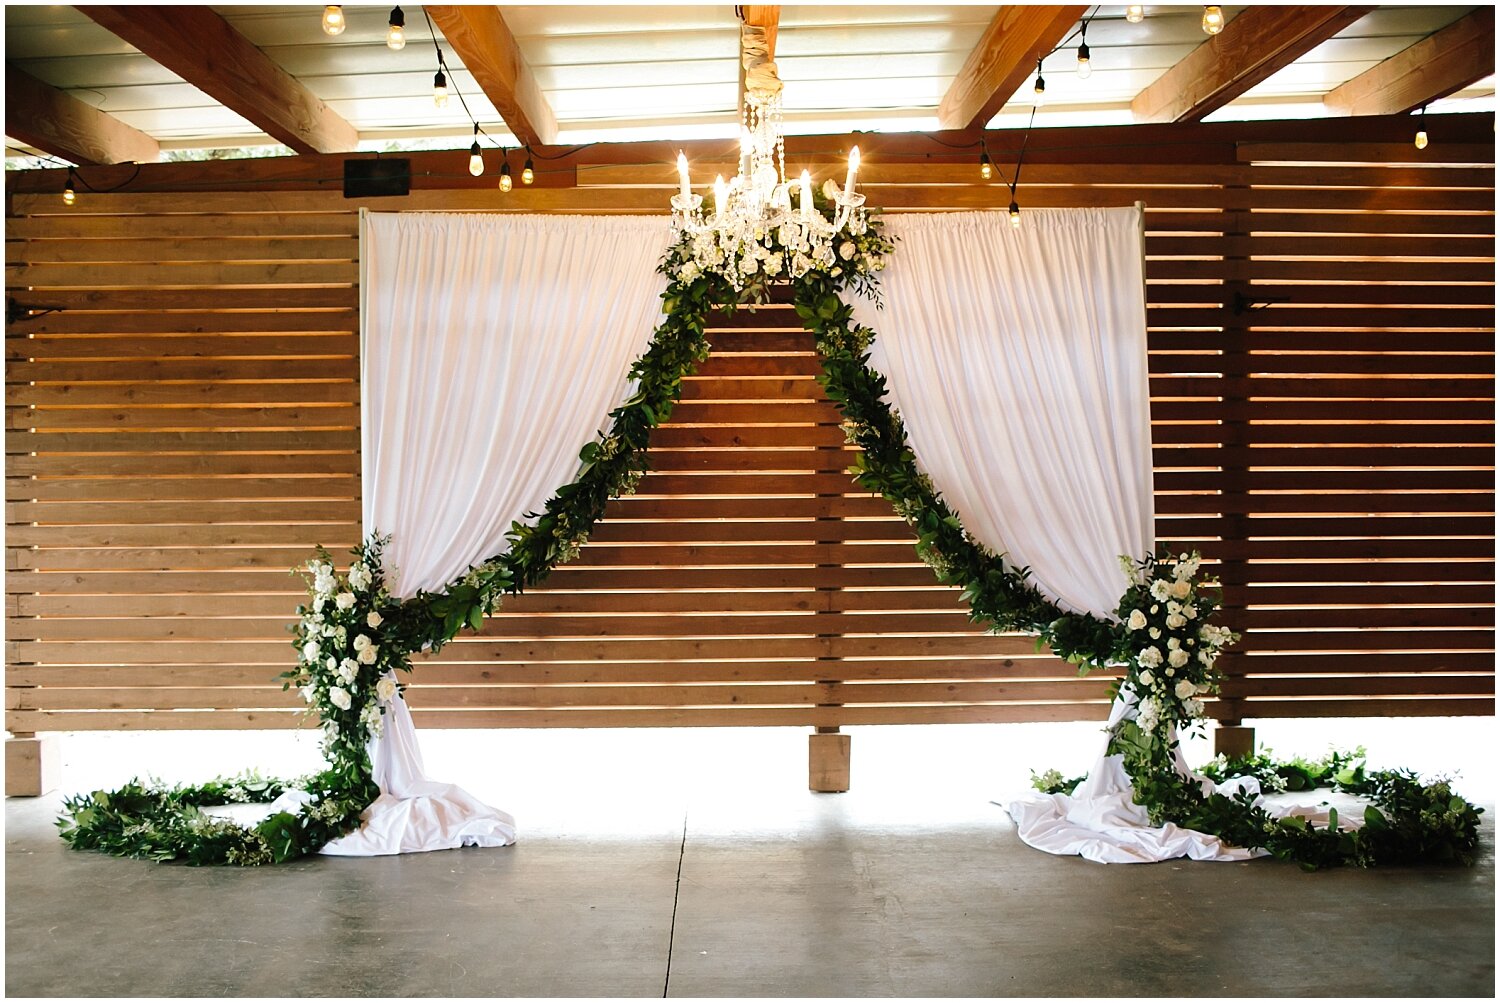  wedding arch inspiration 